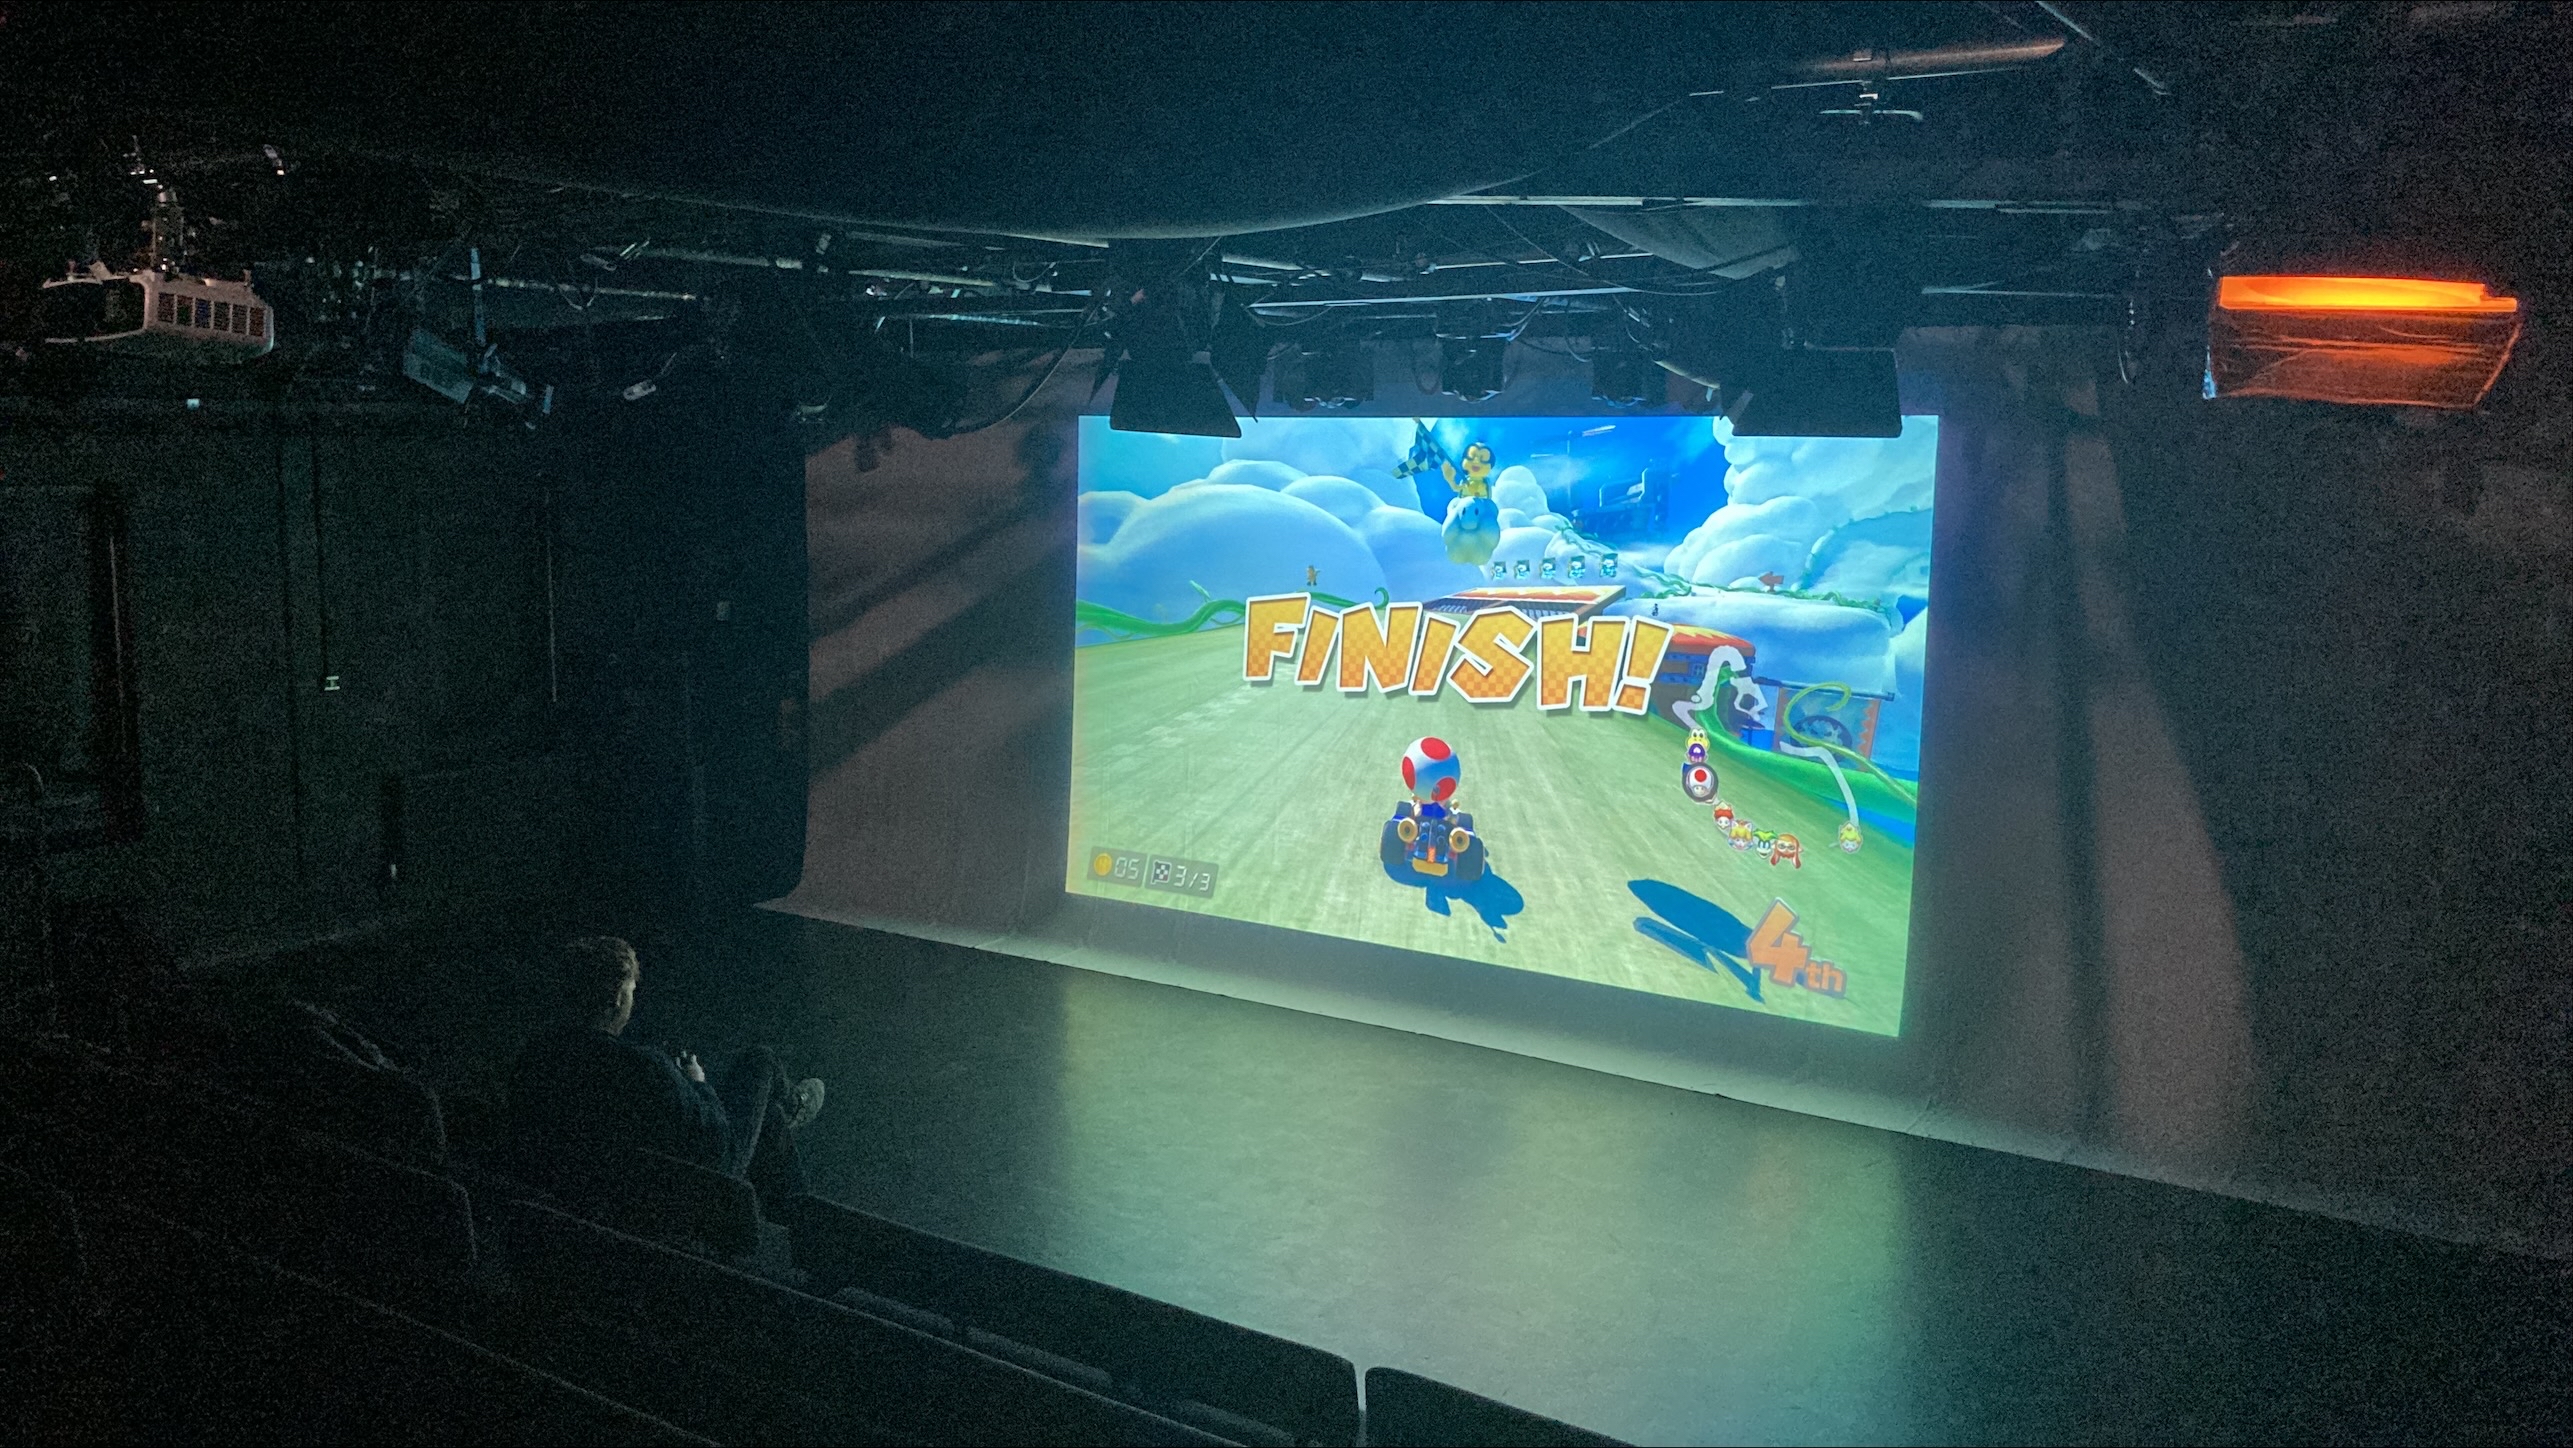 Big Screen Gaming showing the finish screen of Mario Kart 8